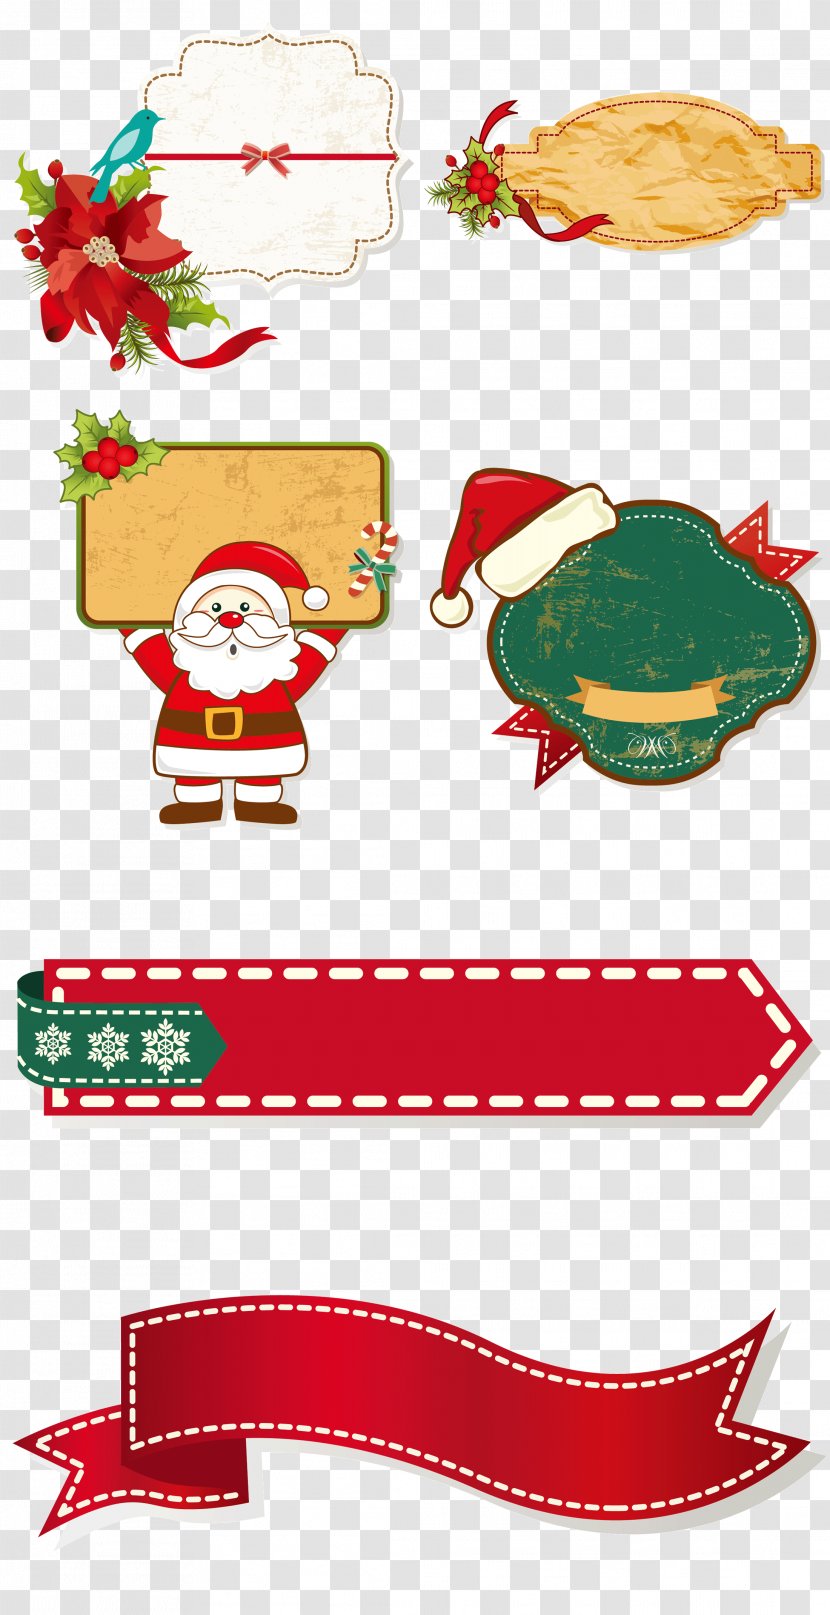 Santa Claus Christmas Decoration Clip Art - Produce - Cartoon Border Collection Transparent PNG